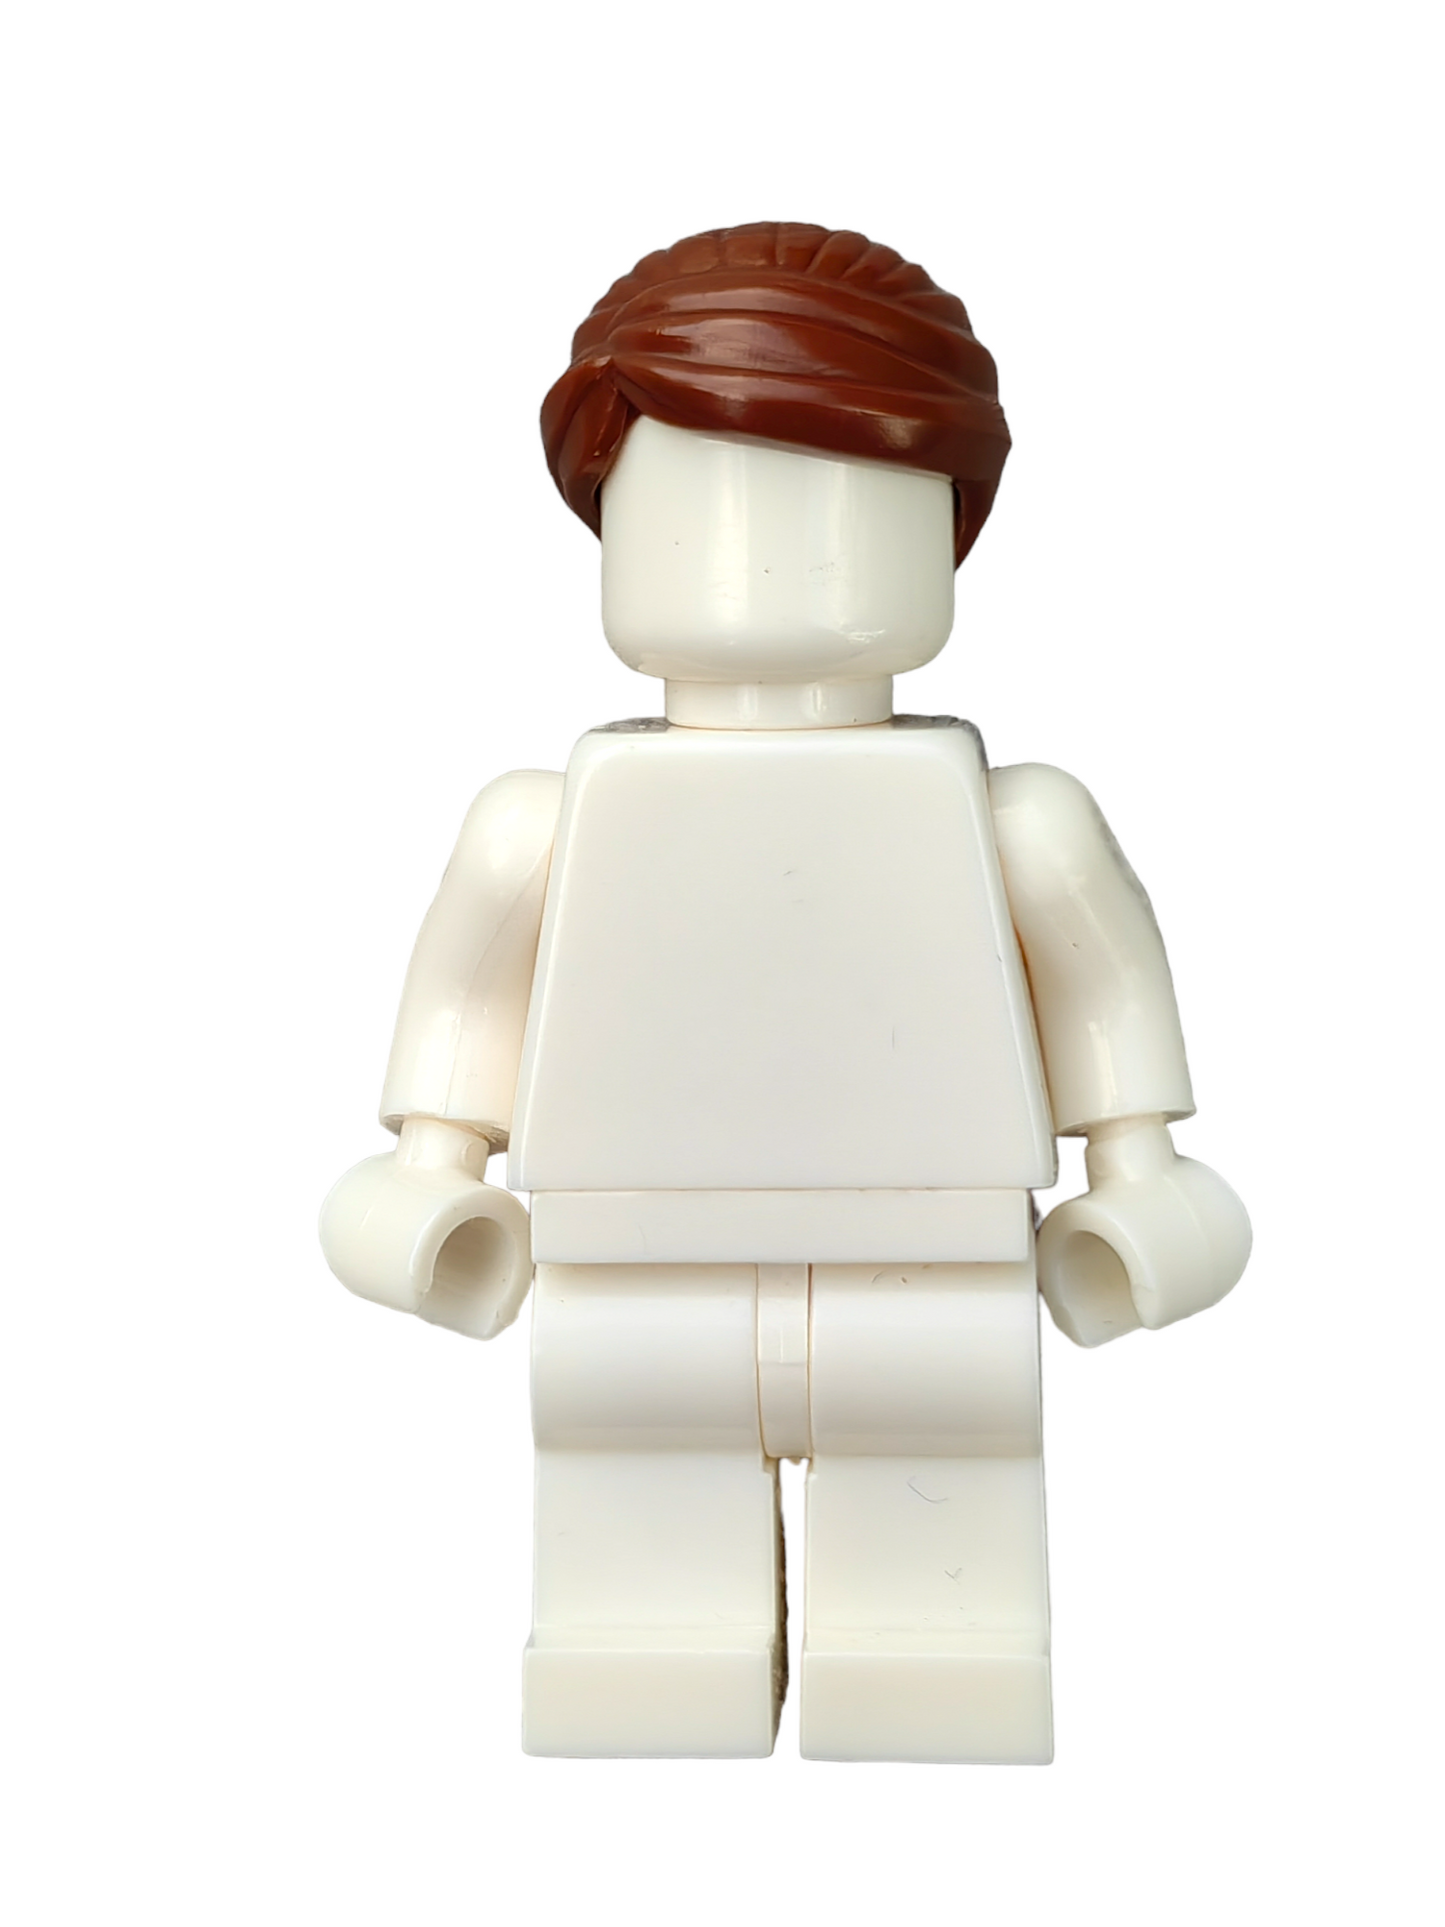 LEGO Wig, Brown Hair Swept Back into a Bun - UB1259